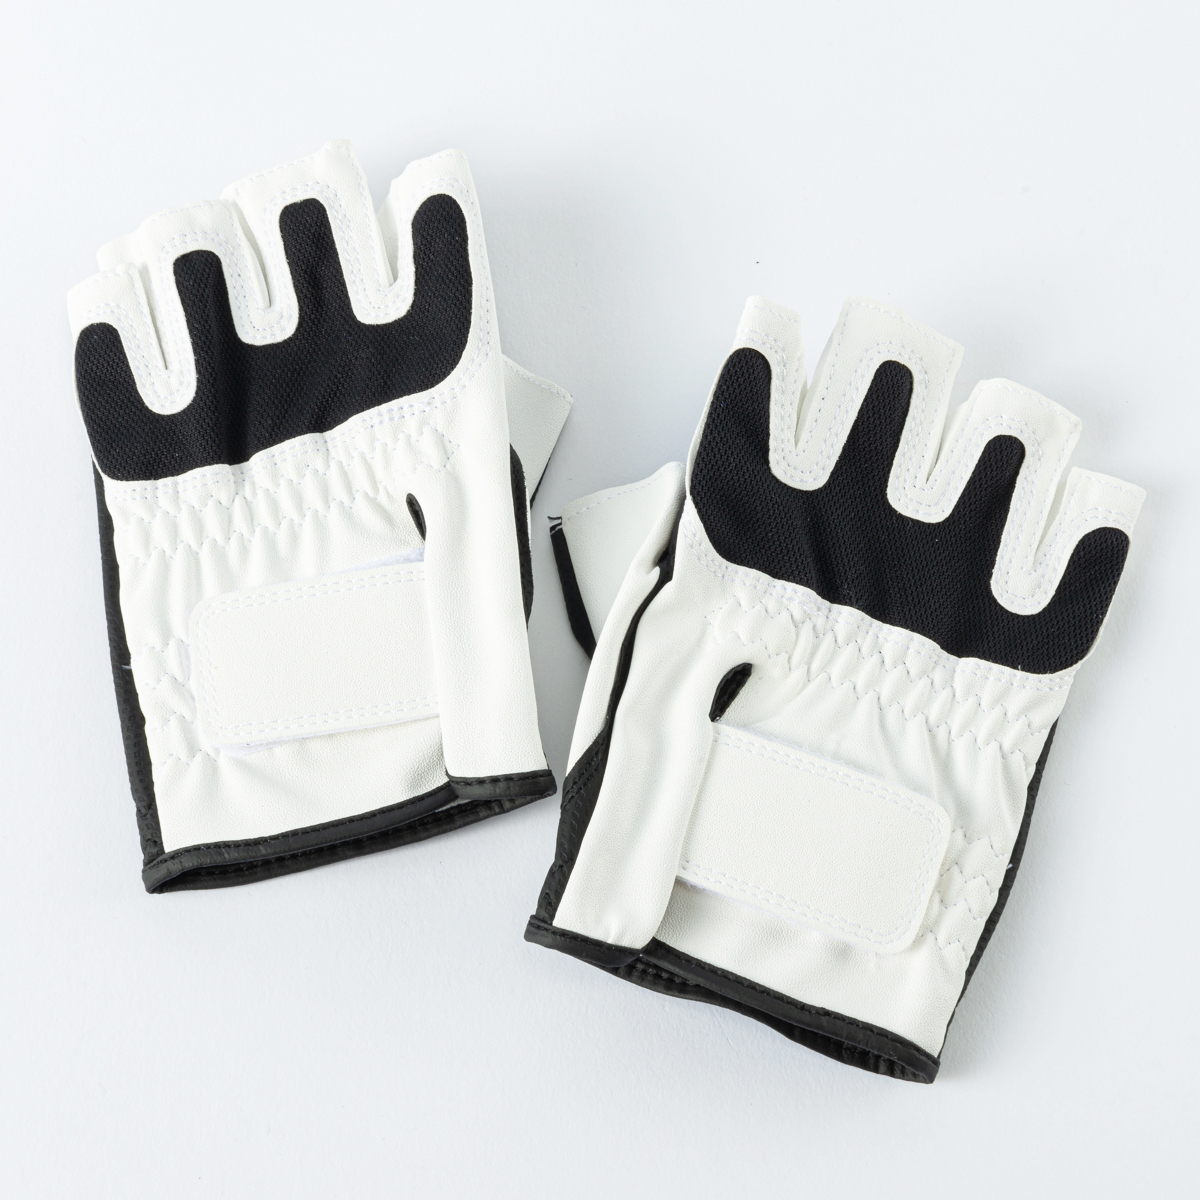 re Sachs Drive glove half finger mesh type LZGL-5952 white / black 